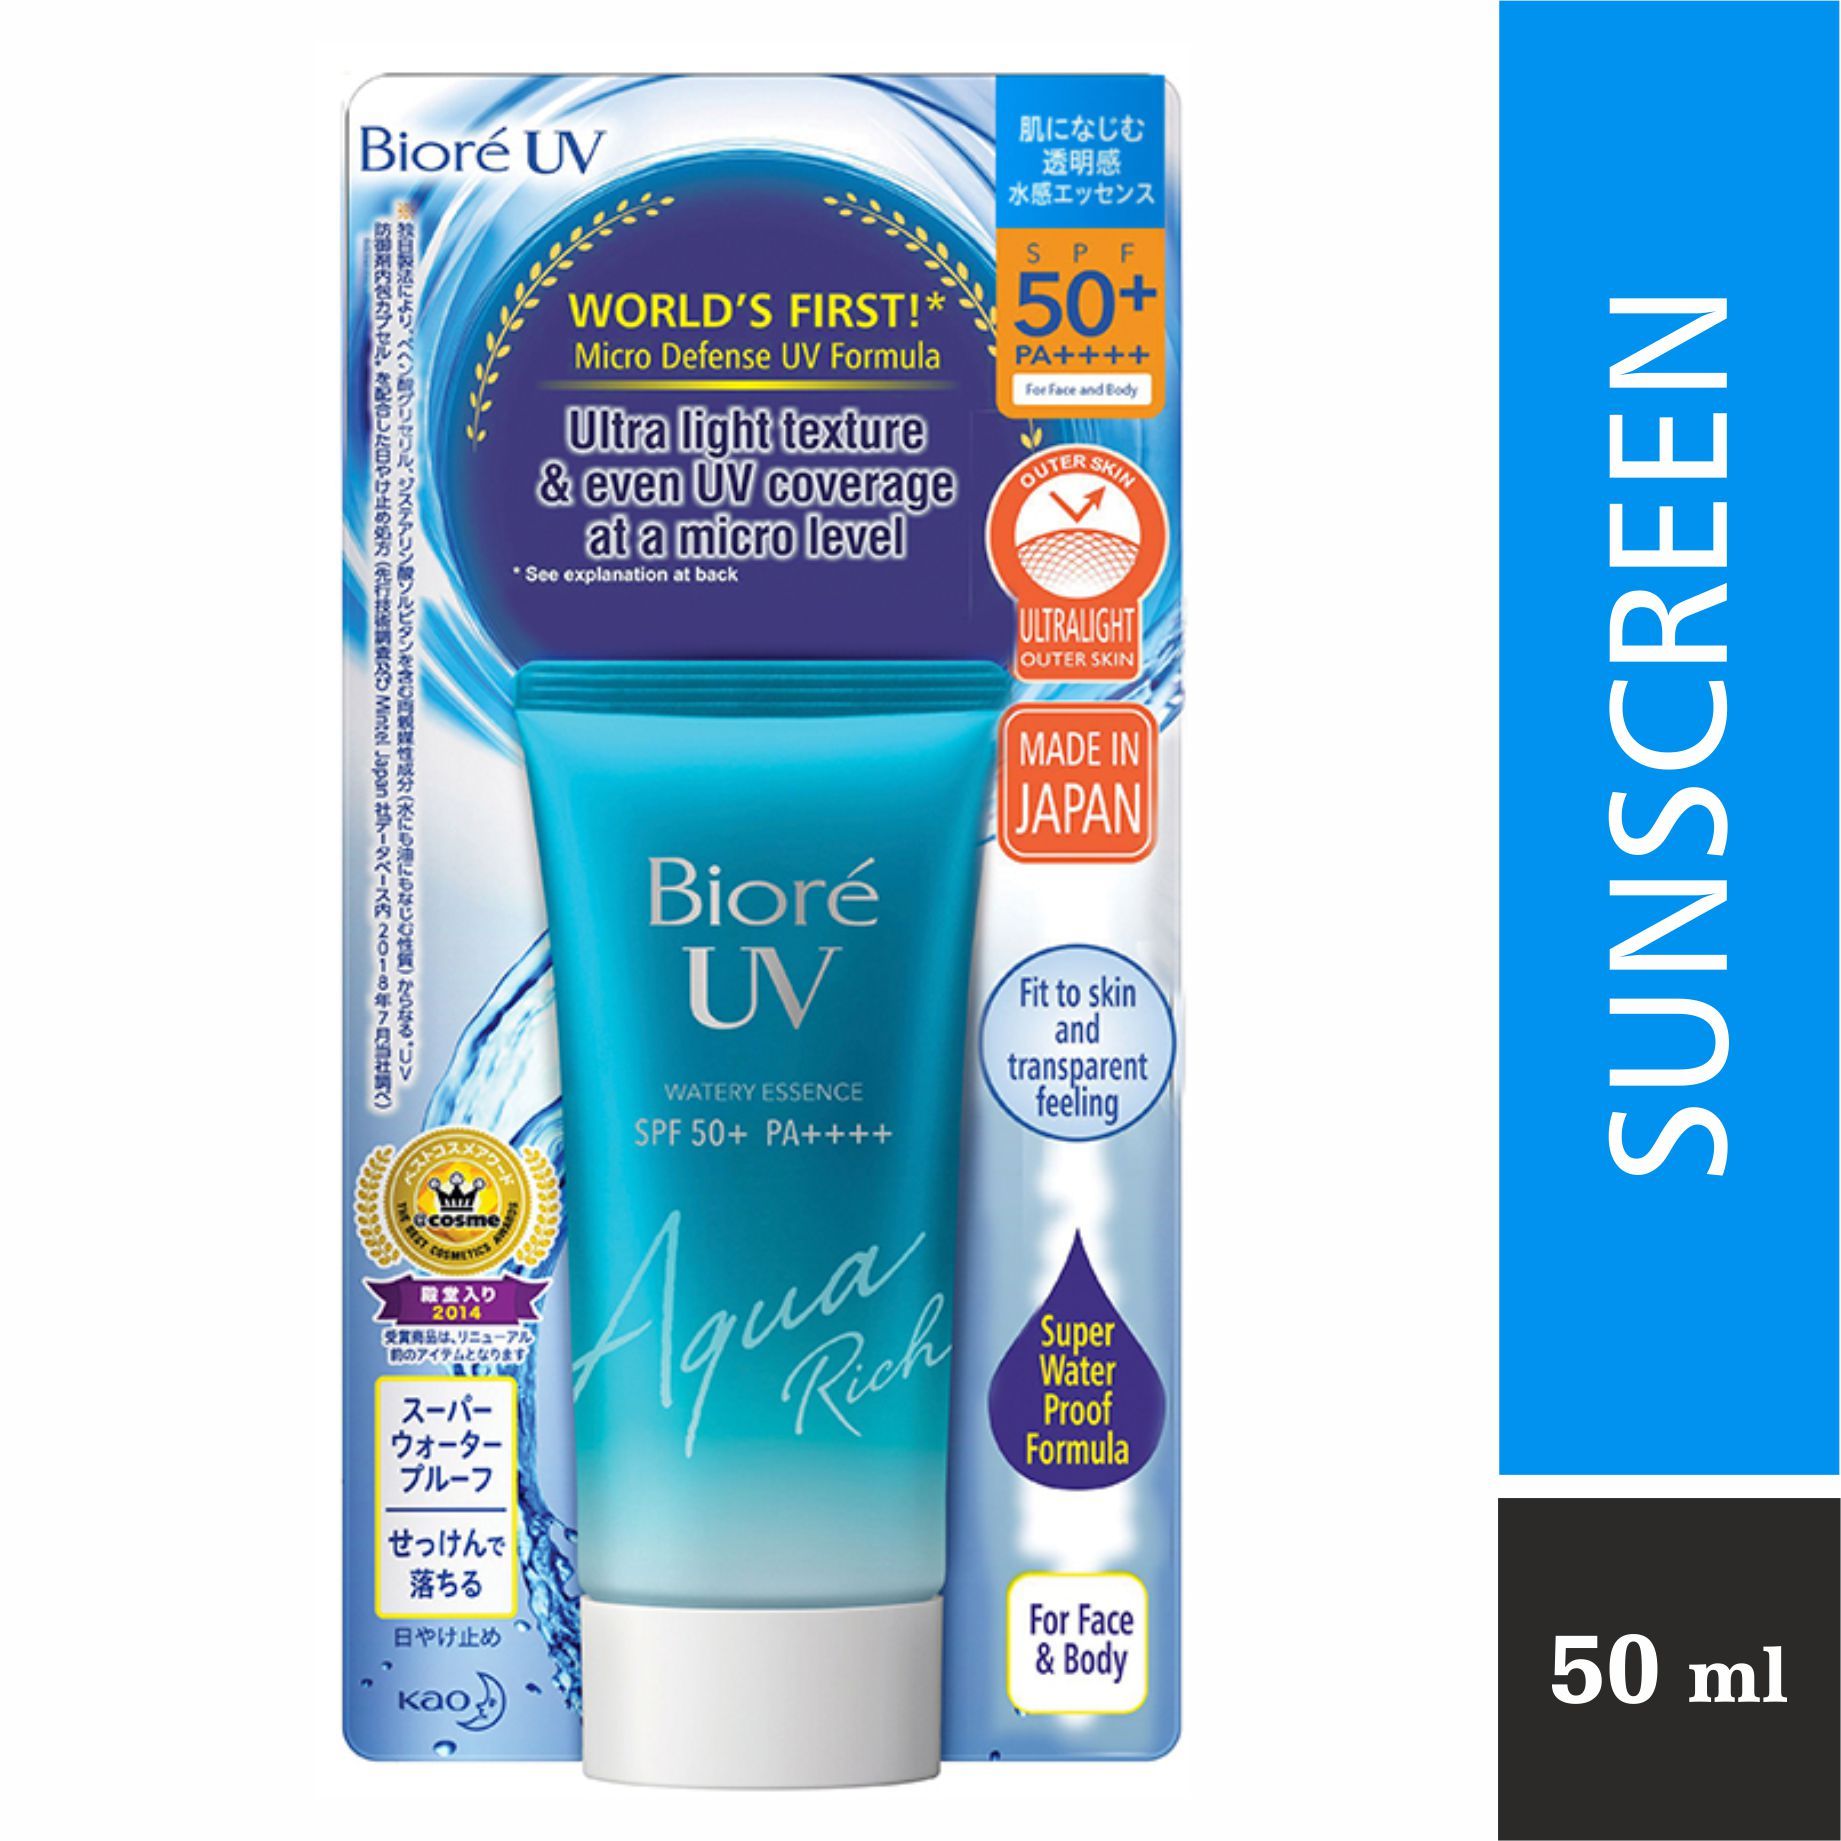 Biore Uv Aqua Rich Watery Essence Sunscreen Spf 50+ Pa++++